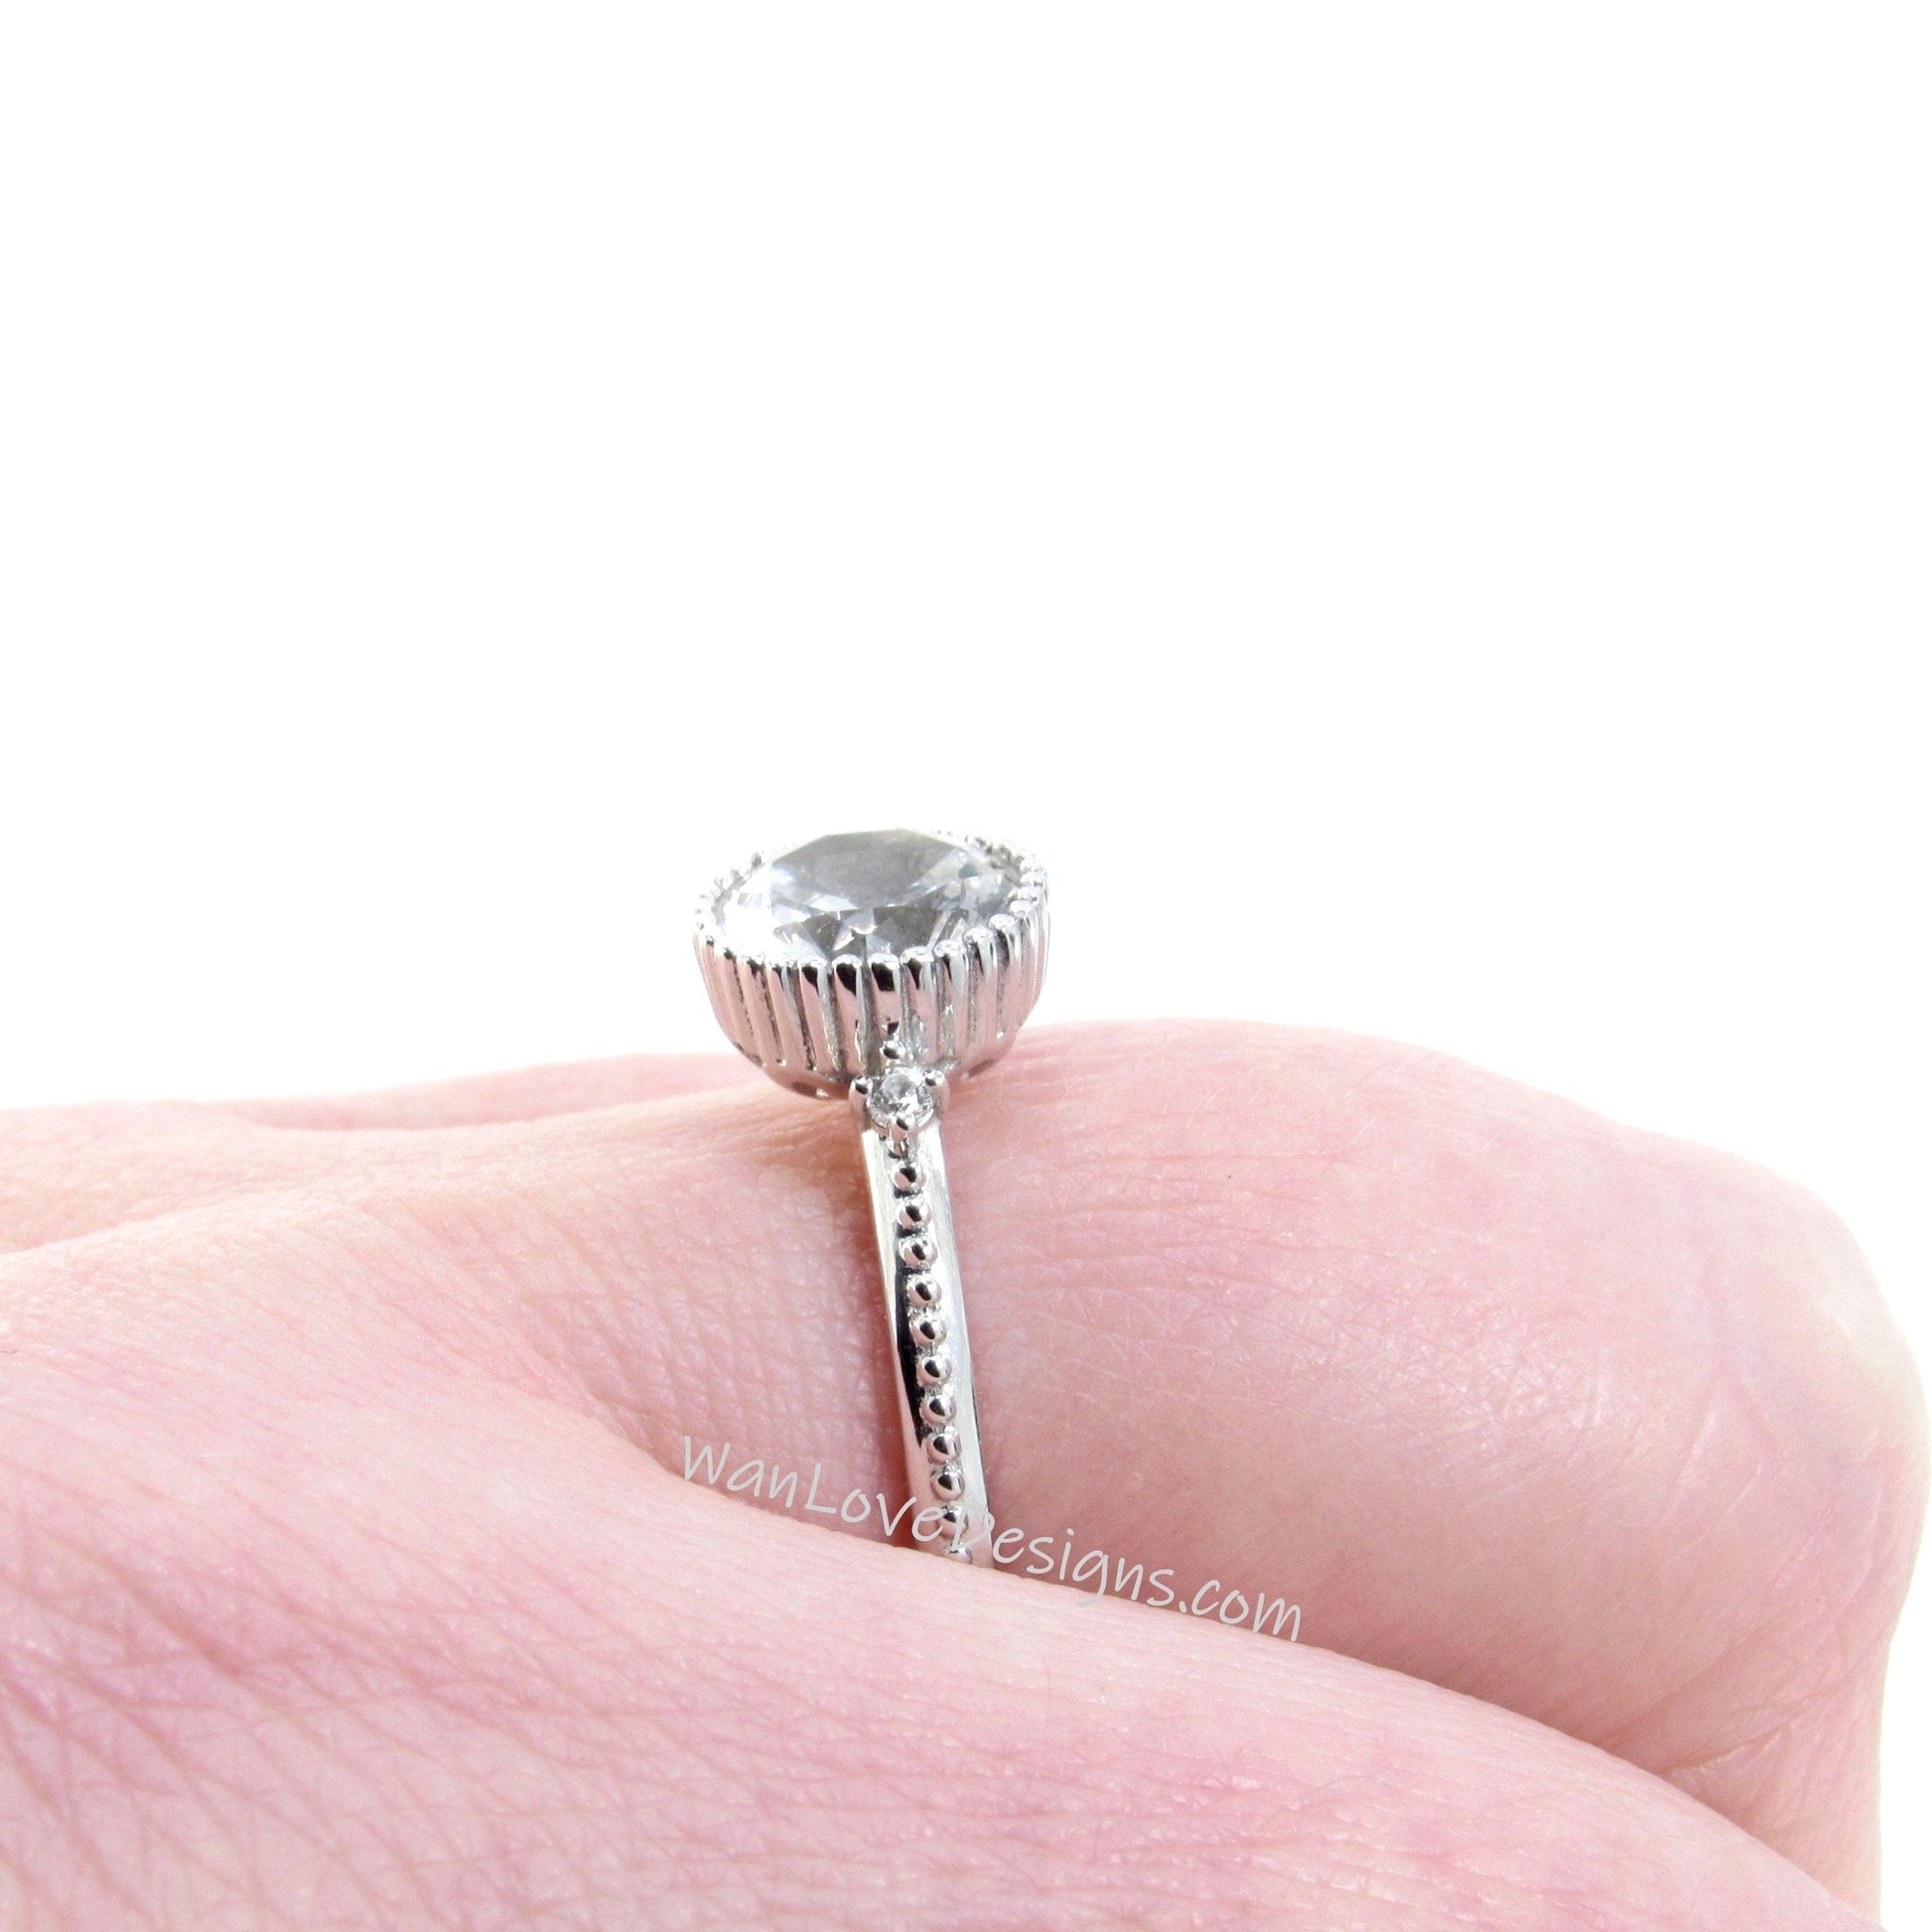 Milgrain Bezel Ring Grey Moissanite & Diamond Round cut Engagement Ring Art Deco round bezel Ring wedding bridal promise ring anniversary Wan Love Designs